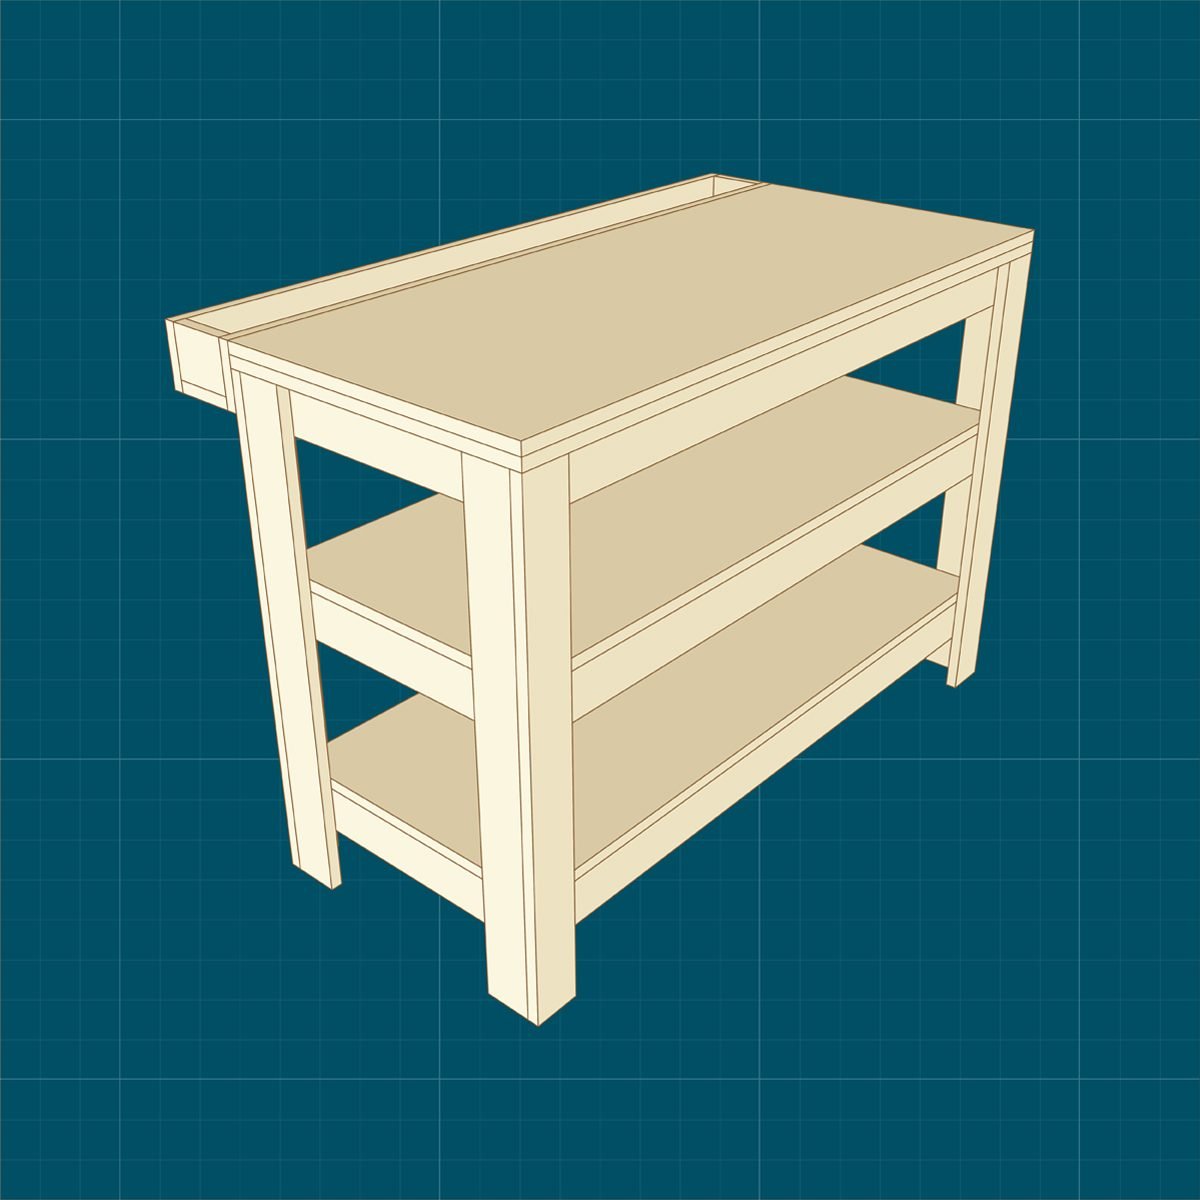 How to Build a DIY Workbench with Storage